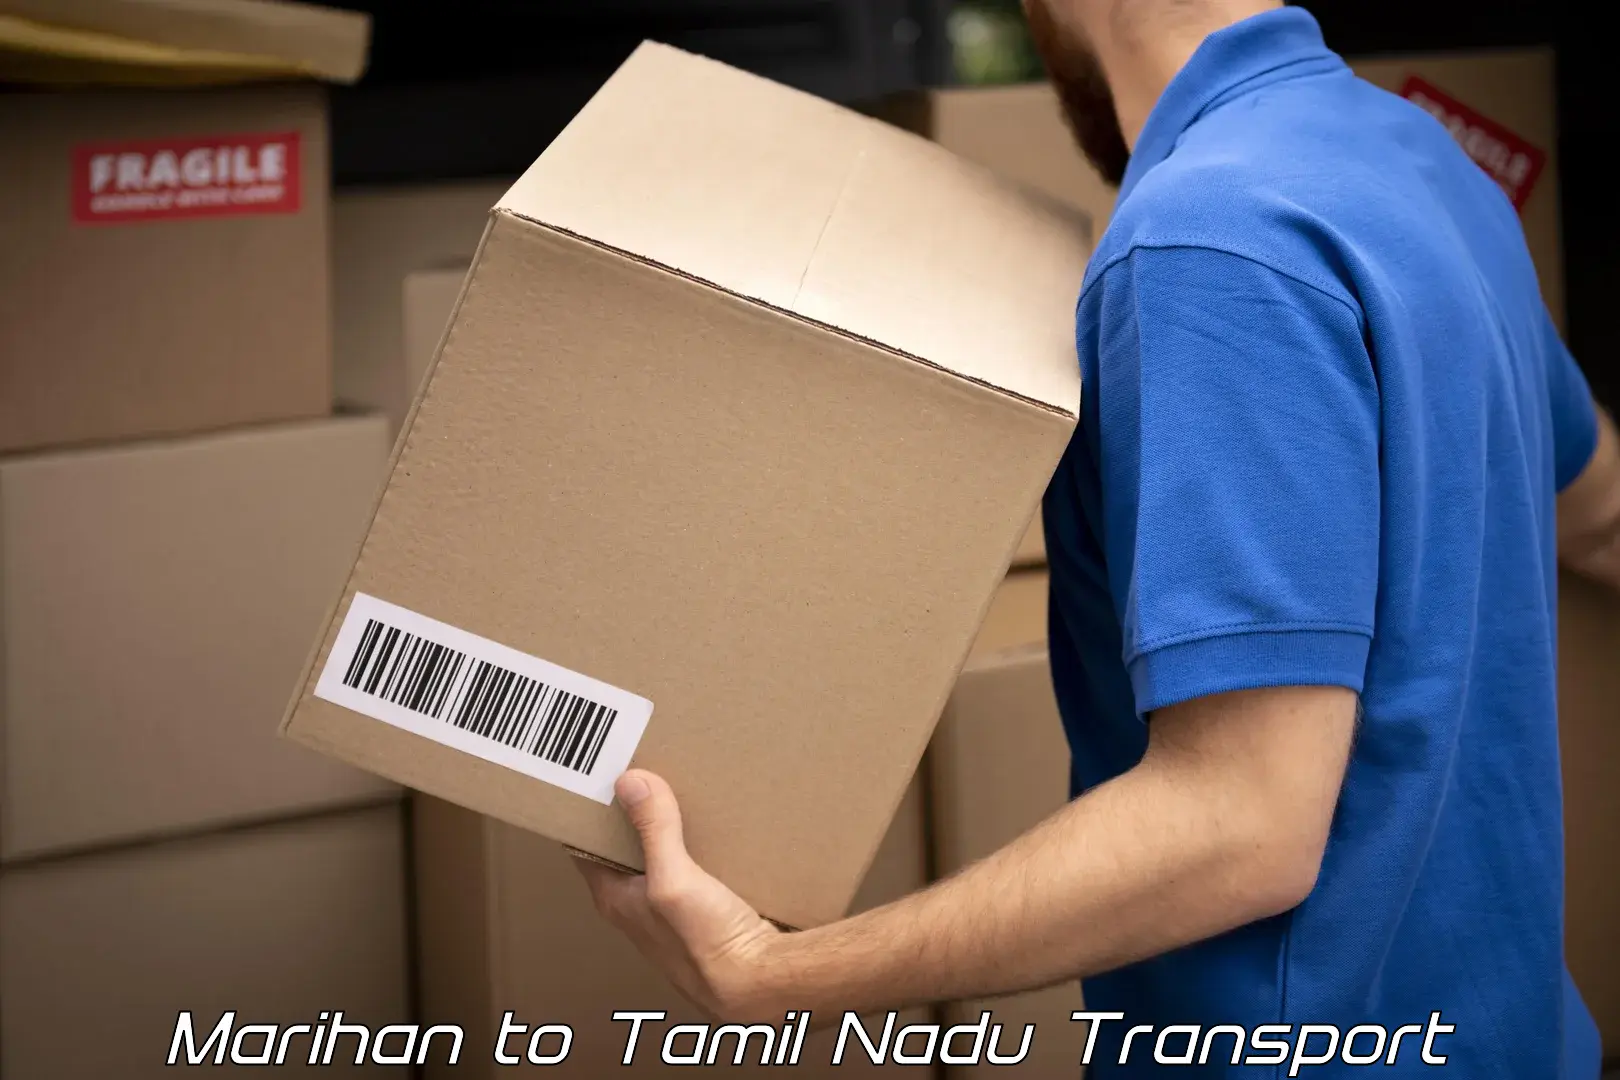 Lorry transport service Marihan to Chennai